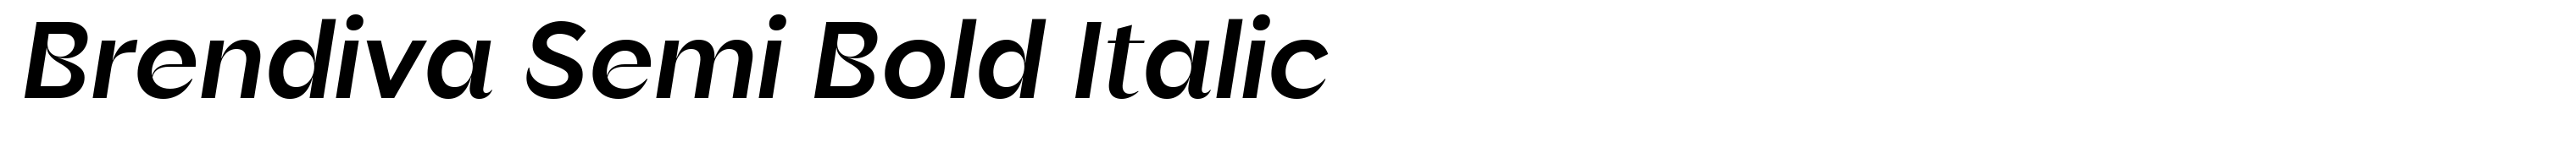 Brendiva Semi Bold Italic